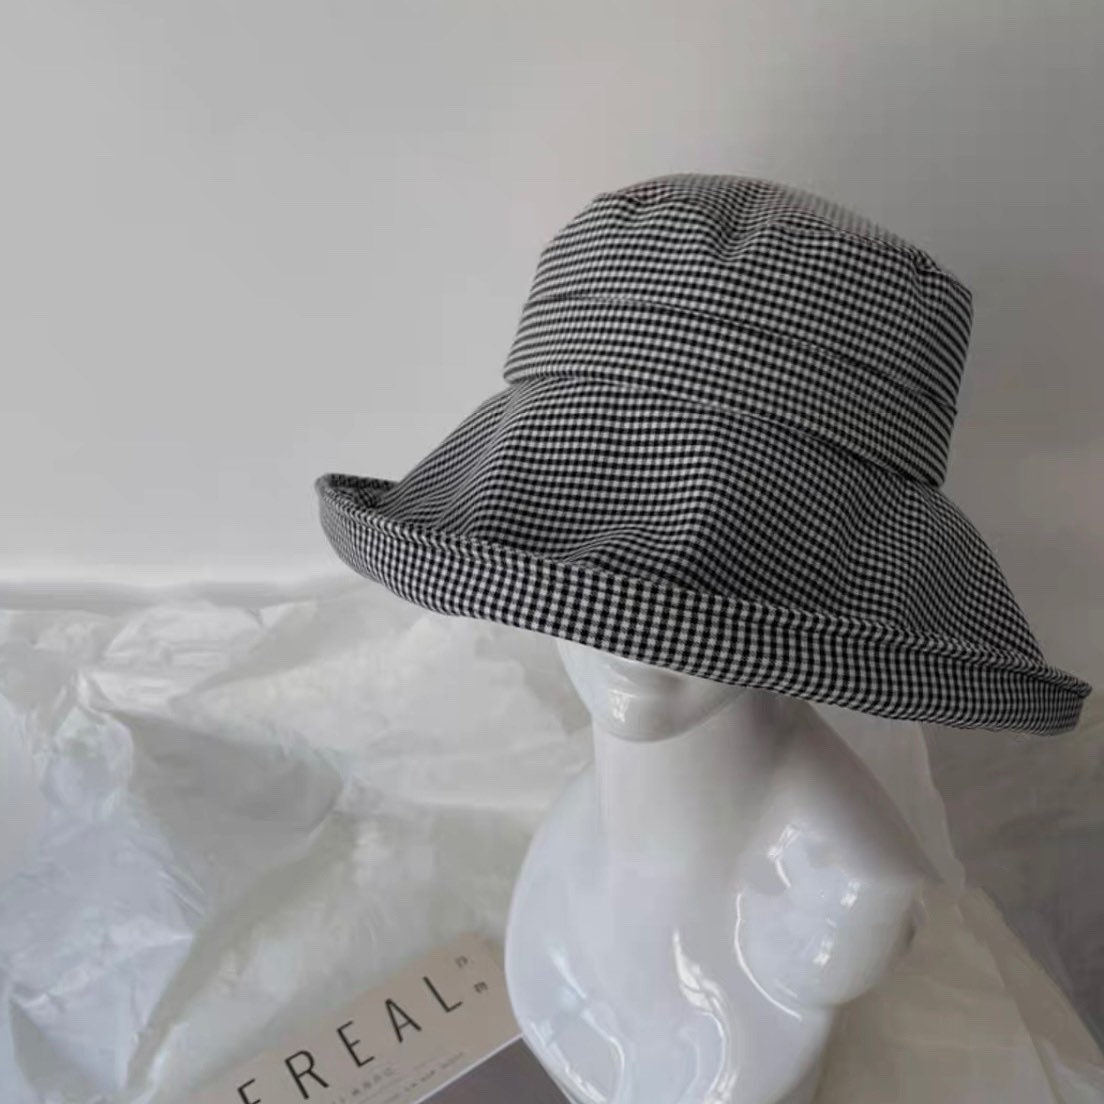 Louis Vuitton Black Nylon Monogram Bucket Hat worn by Kylian